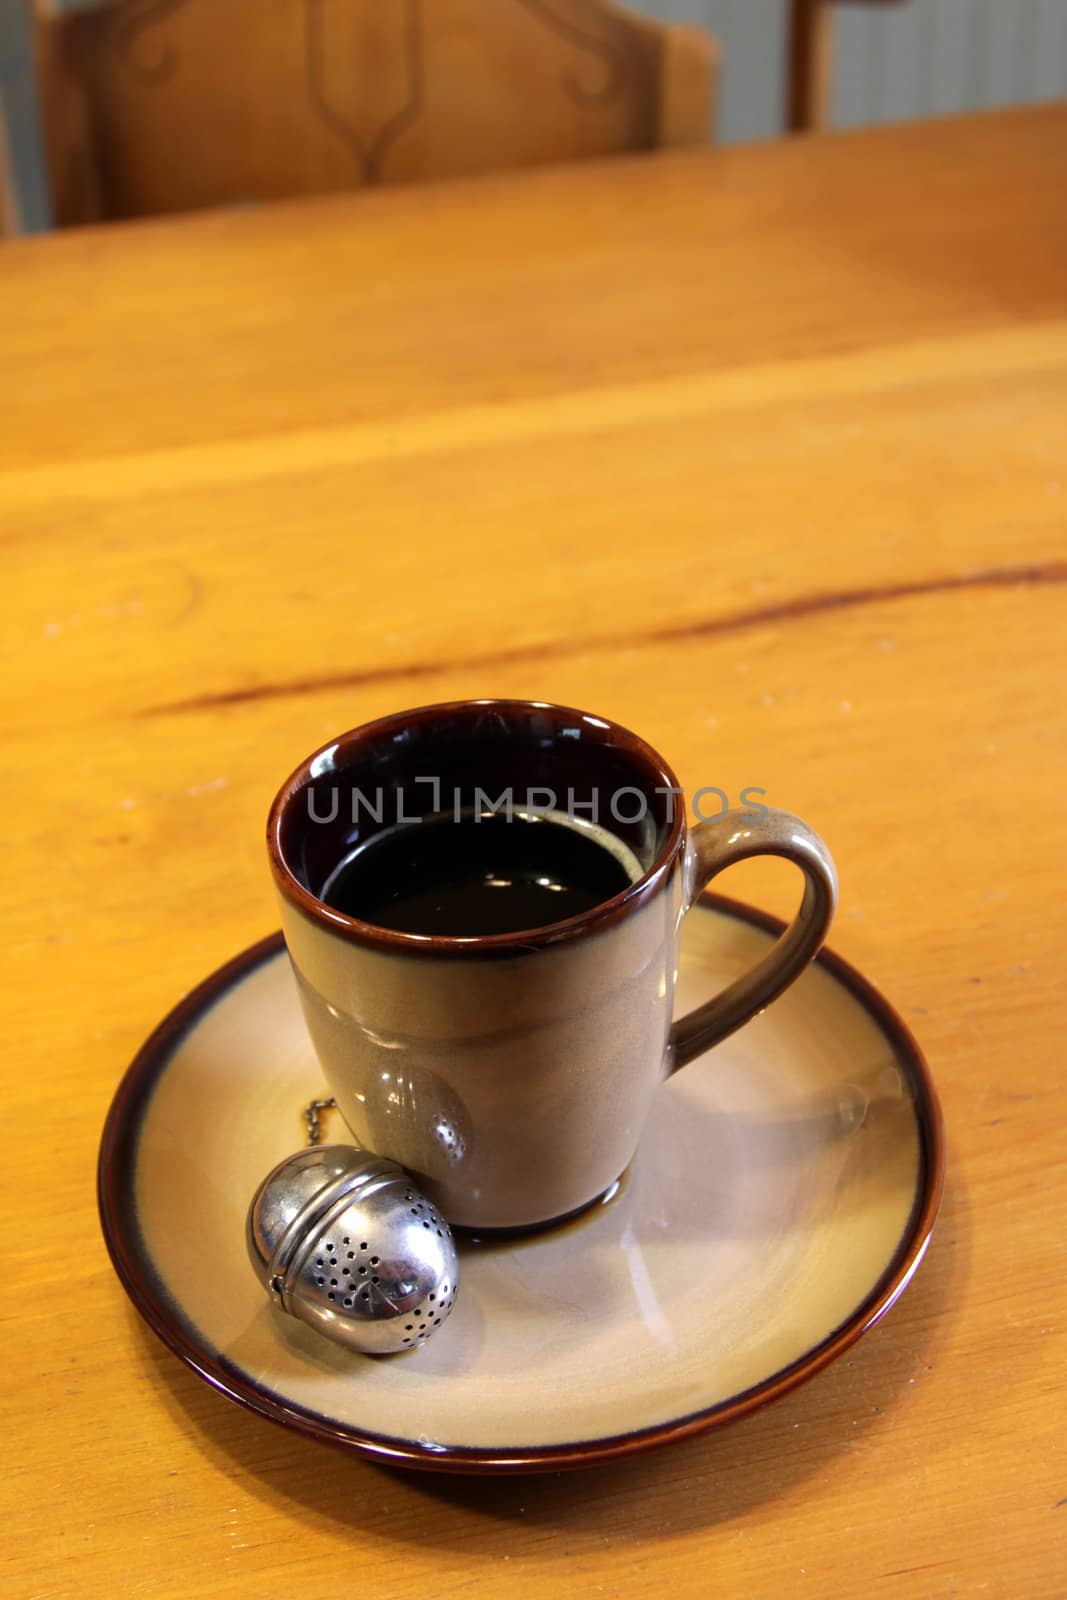 A tea strainer sitting next to a mug of hot freshly brewed tea.
